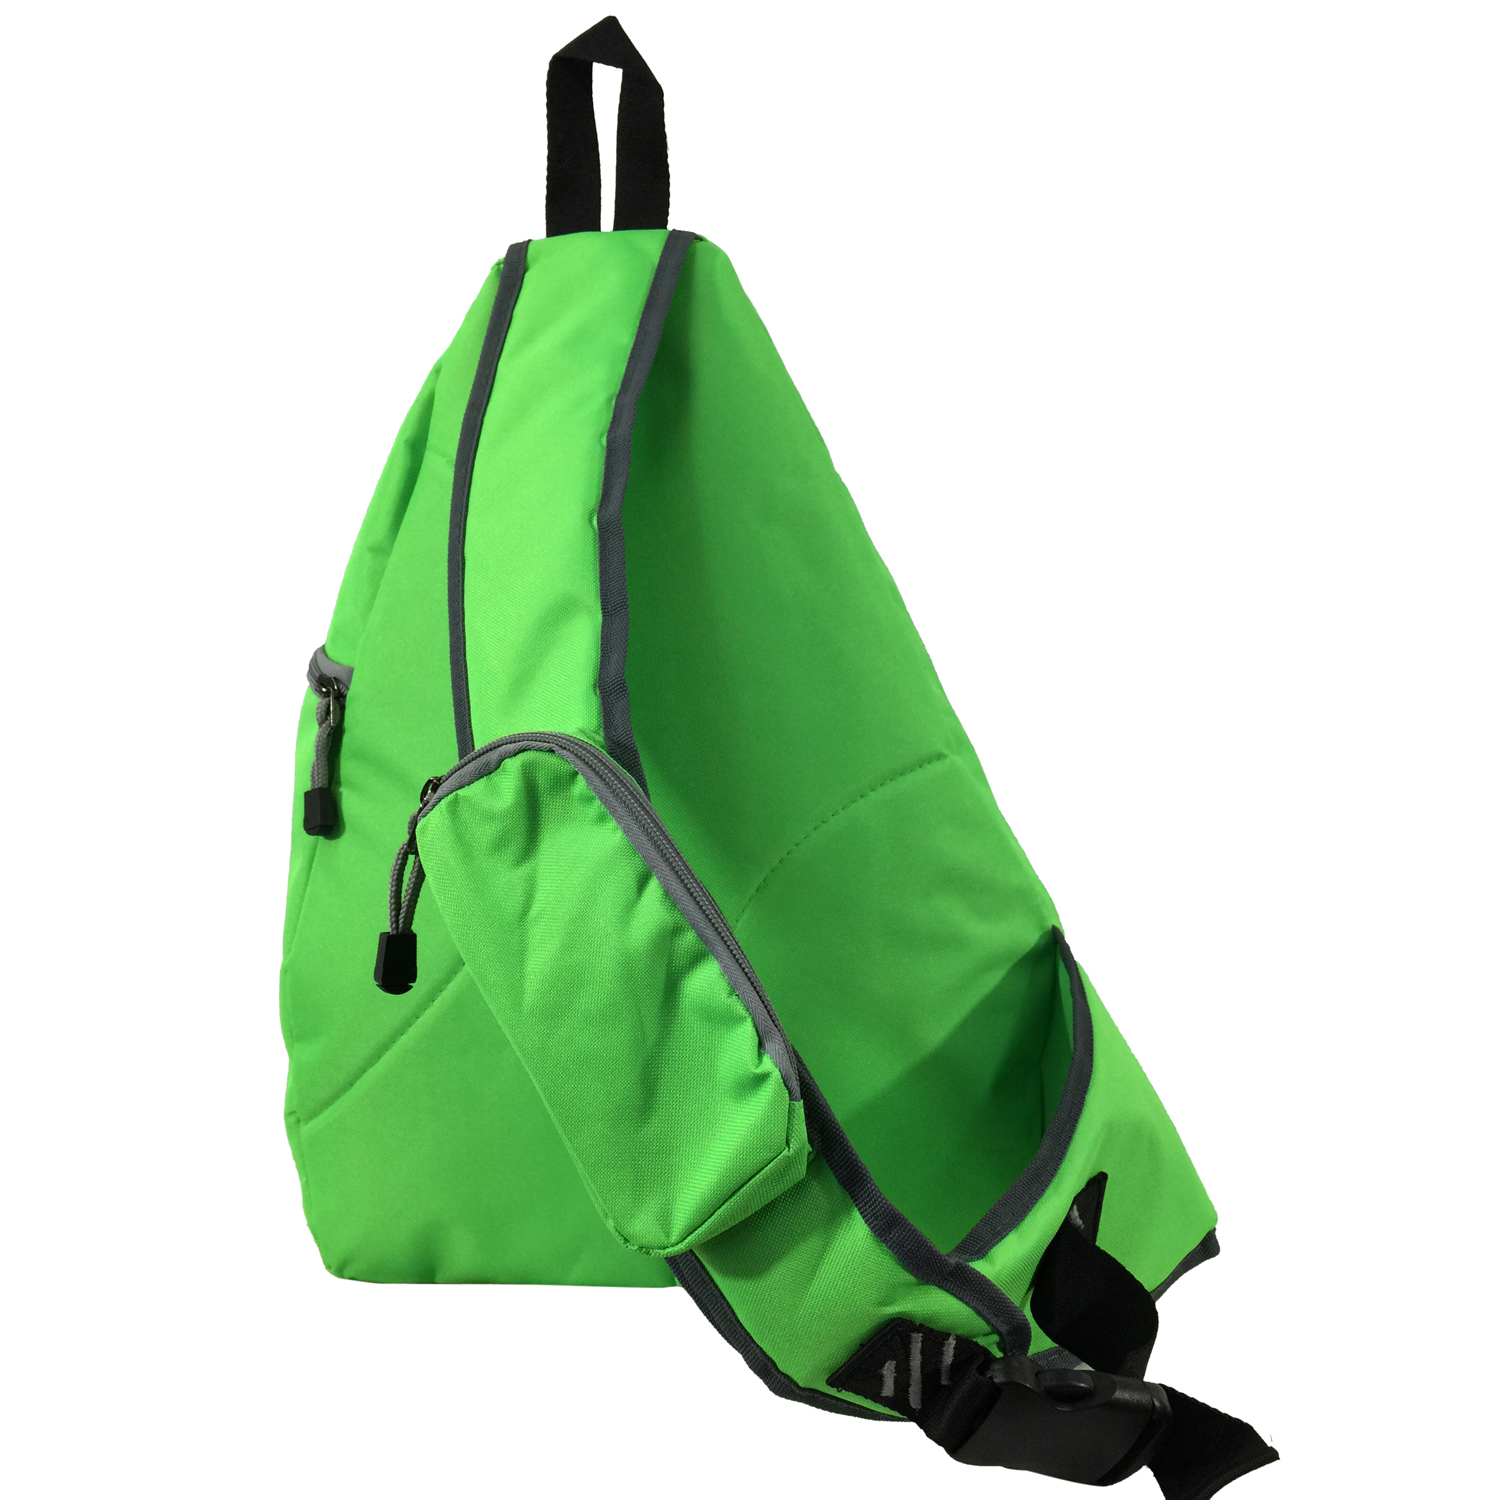 K-Cliffs Reflective Sling Backpack Bright Color Safety Cross Body Bag Student Daypack Bookbag Green - image 3 of 7